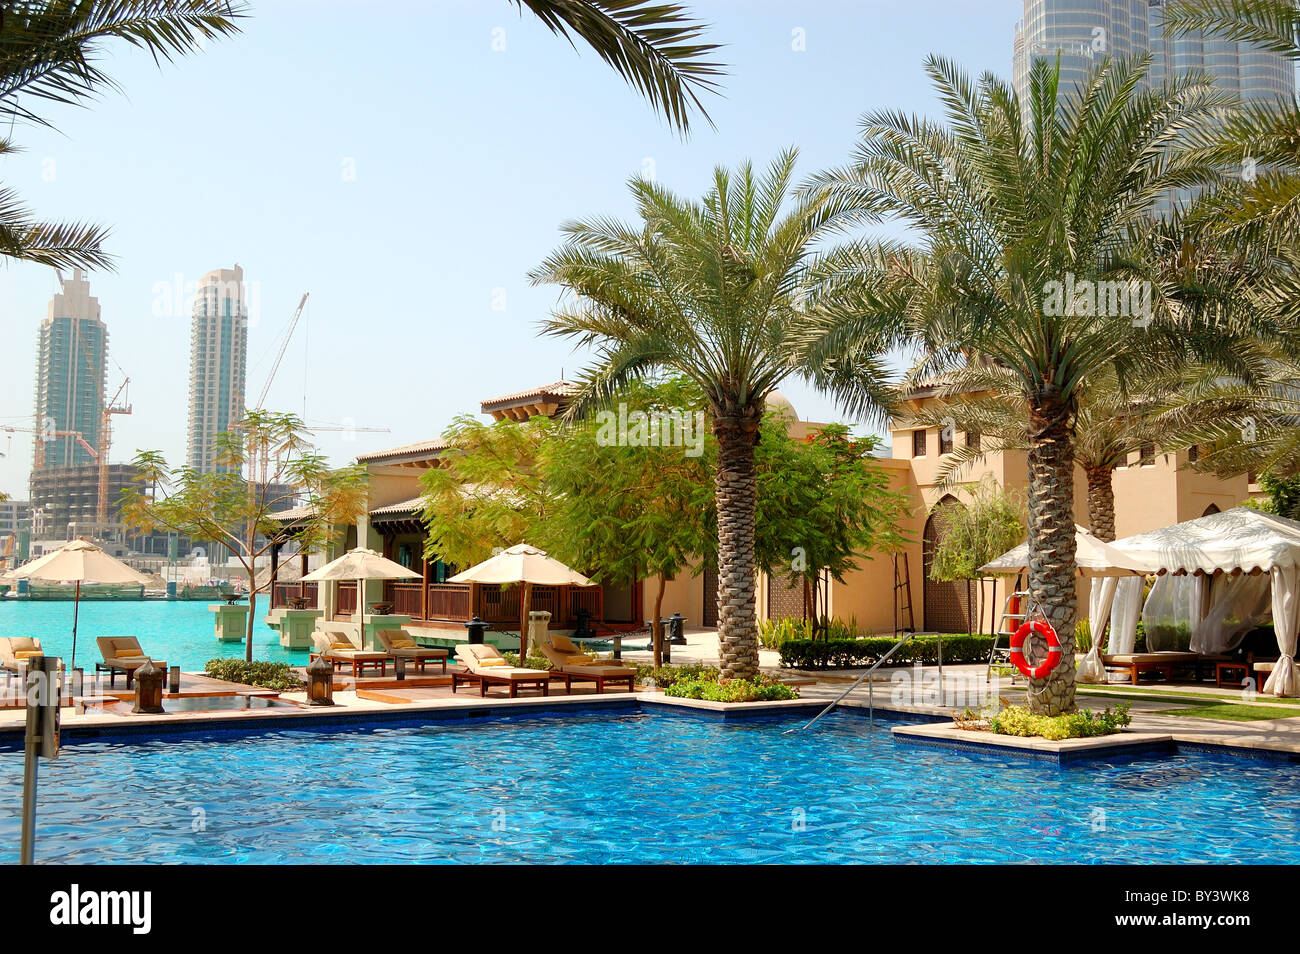 The Palace the Old Town luxury hotel, Dubai, United Arab Emirates Stock Photo